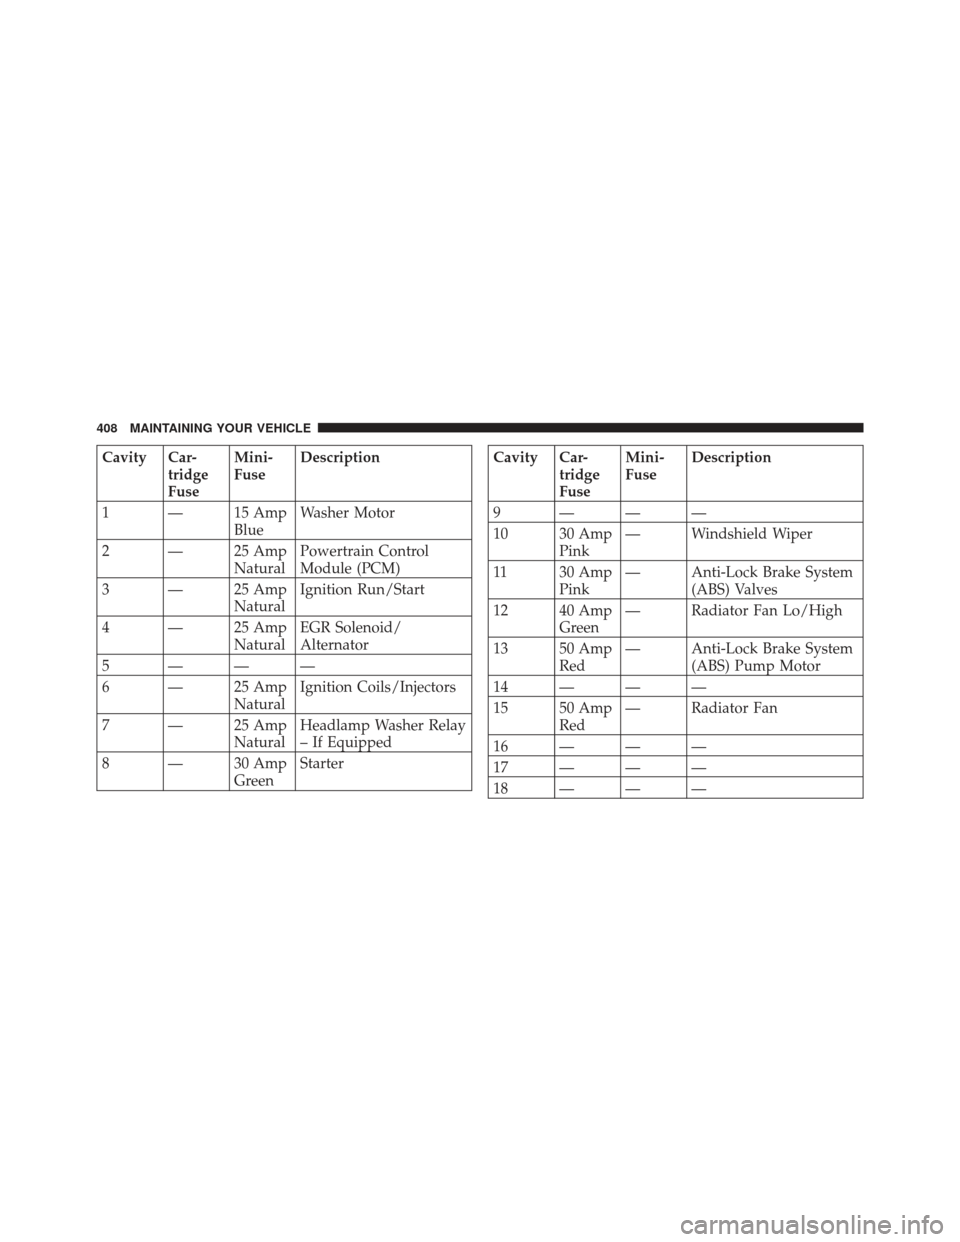 DODGE CHALLENGER 2010 3.G Owners Manual Cavity Car-tridge
FuseMini-
Fuse
Description
1 — 15 Amp BlueWasher Motor
2 — 25 Amp NaturalPowertrain Control
Module (PCM)
3 — 25 Amp NaturalIgnition Run/Start
4 — 25 Amp NaturalEGR Solenoid/
